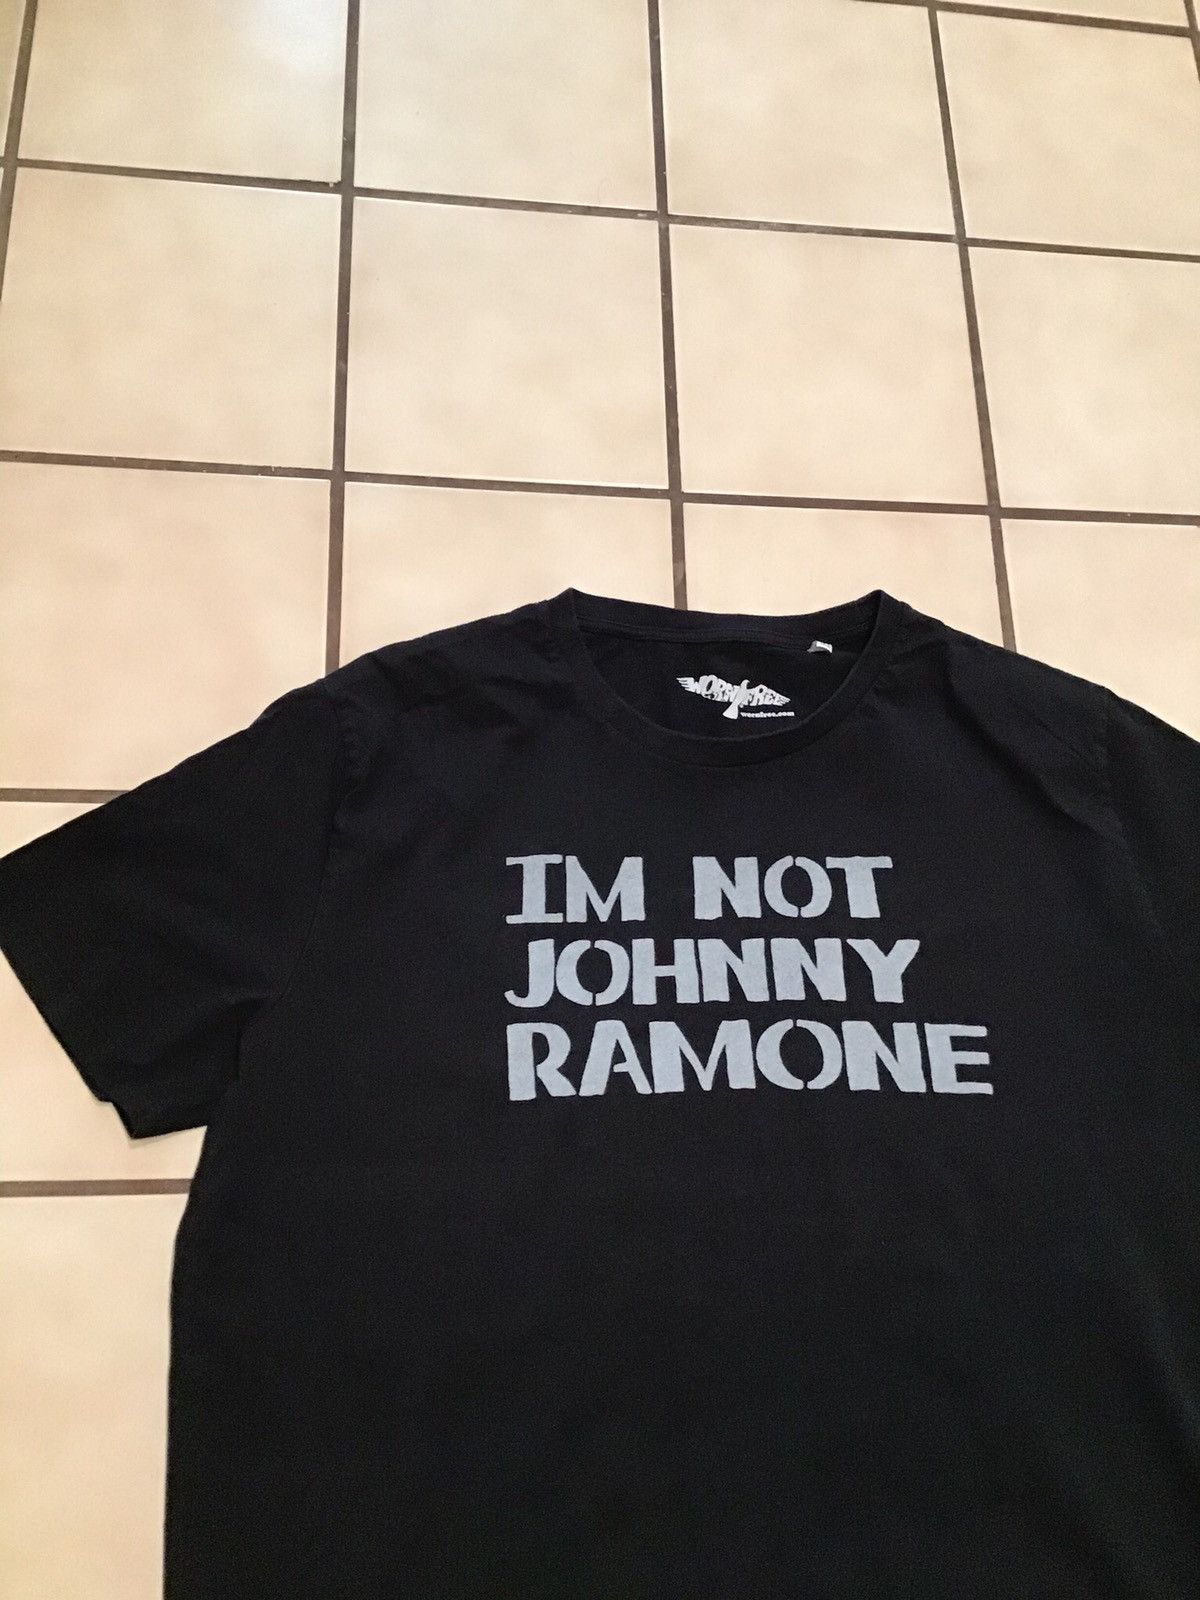 Band Tees Worn Free Im Not Johnny Ramone The Ramones Punk Rock T-shirt Size US XXL / EU 58 / 5 - 5 Thumbnail